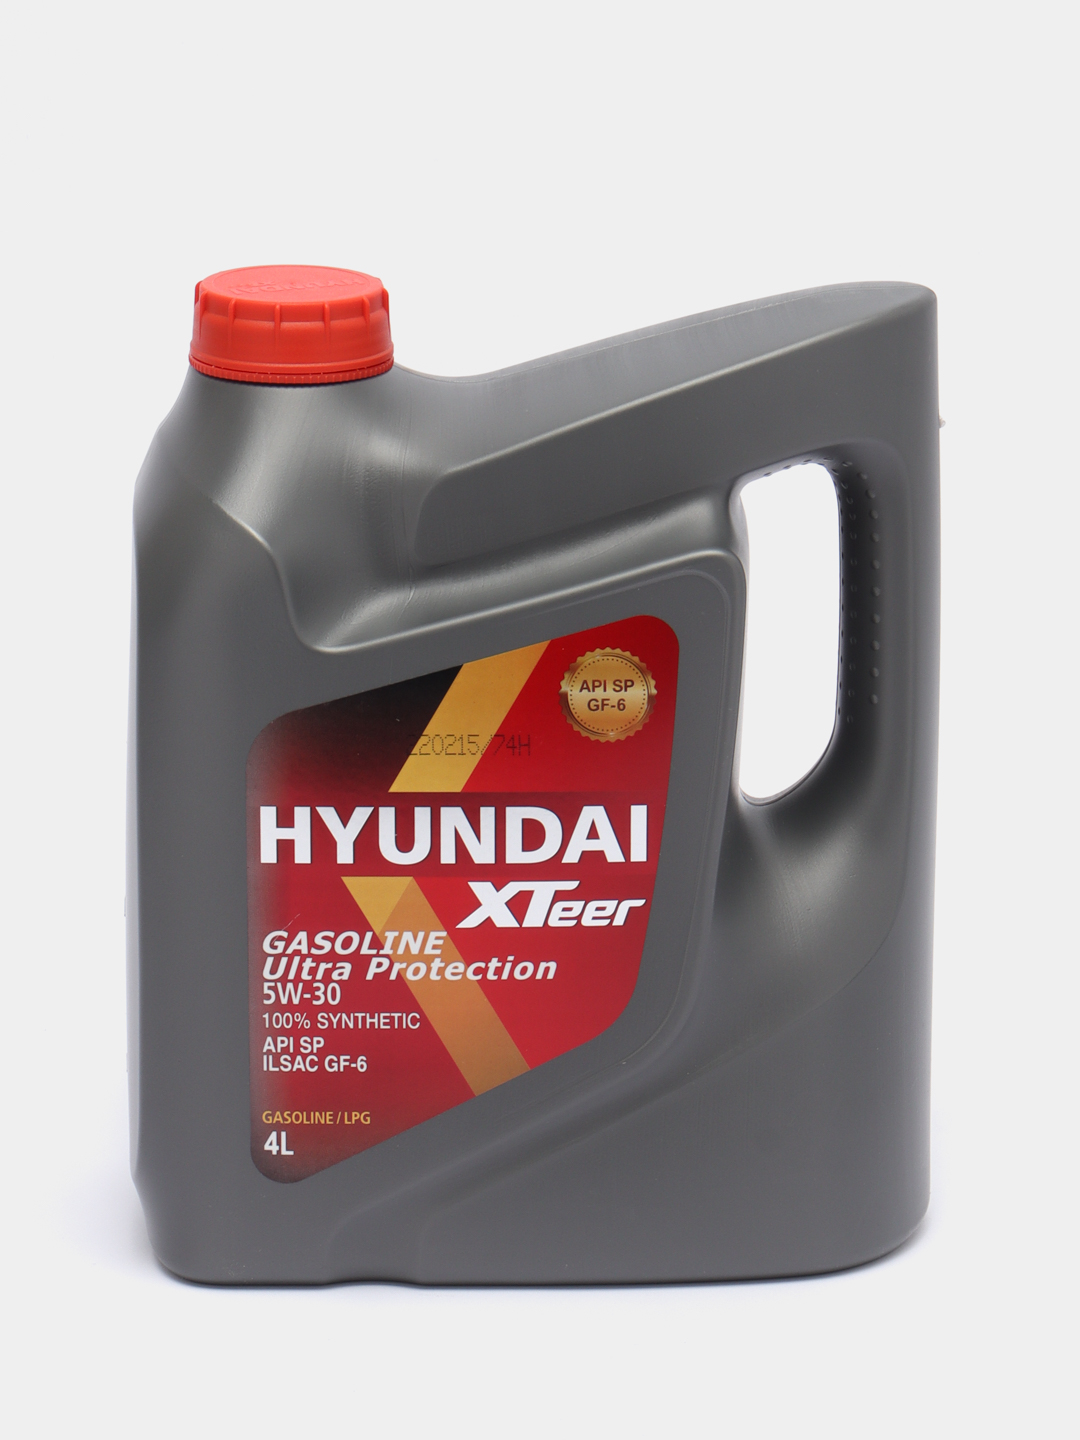 Моторное масло Hyundai XTeer Gasoline Ultra Protection 5W30, 100% .